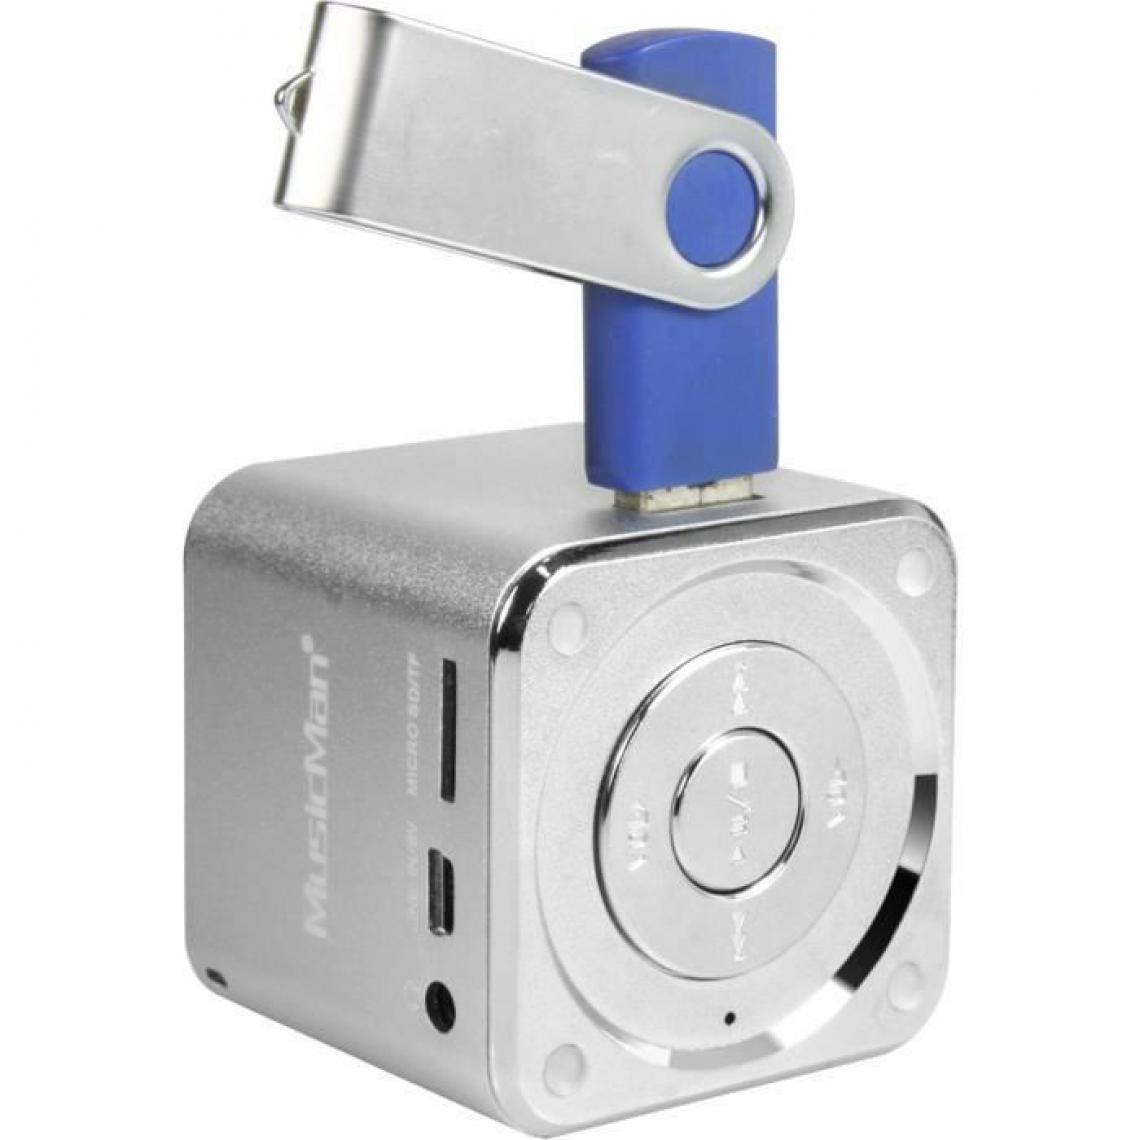 Musicman - MUSICMAN MINI SOUNDSTATION Mini Enceinte portable avec lecteur MP3 integre, port USB et fente carte micro SD jusqua 32 GB - Arge - Enceinte PC